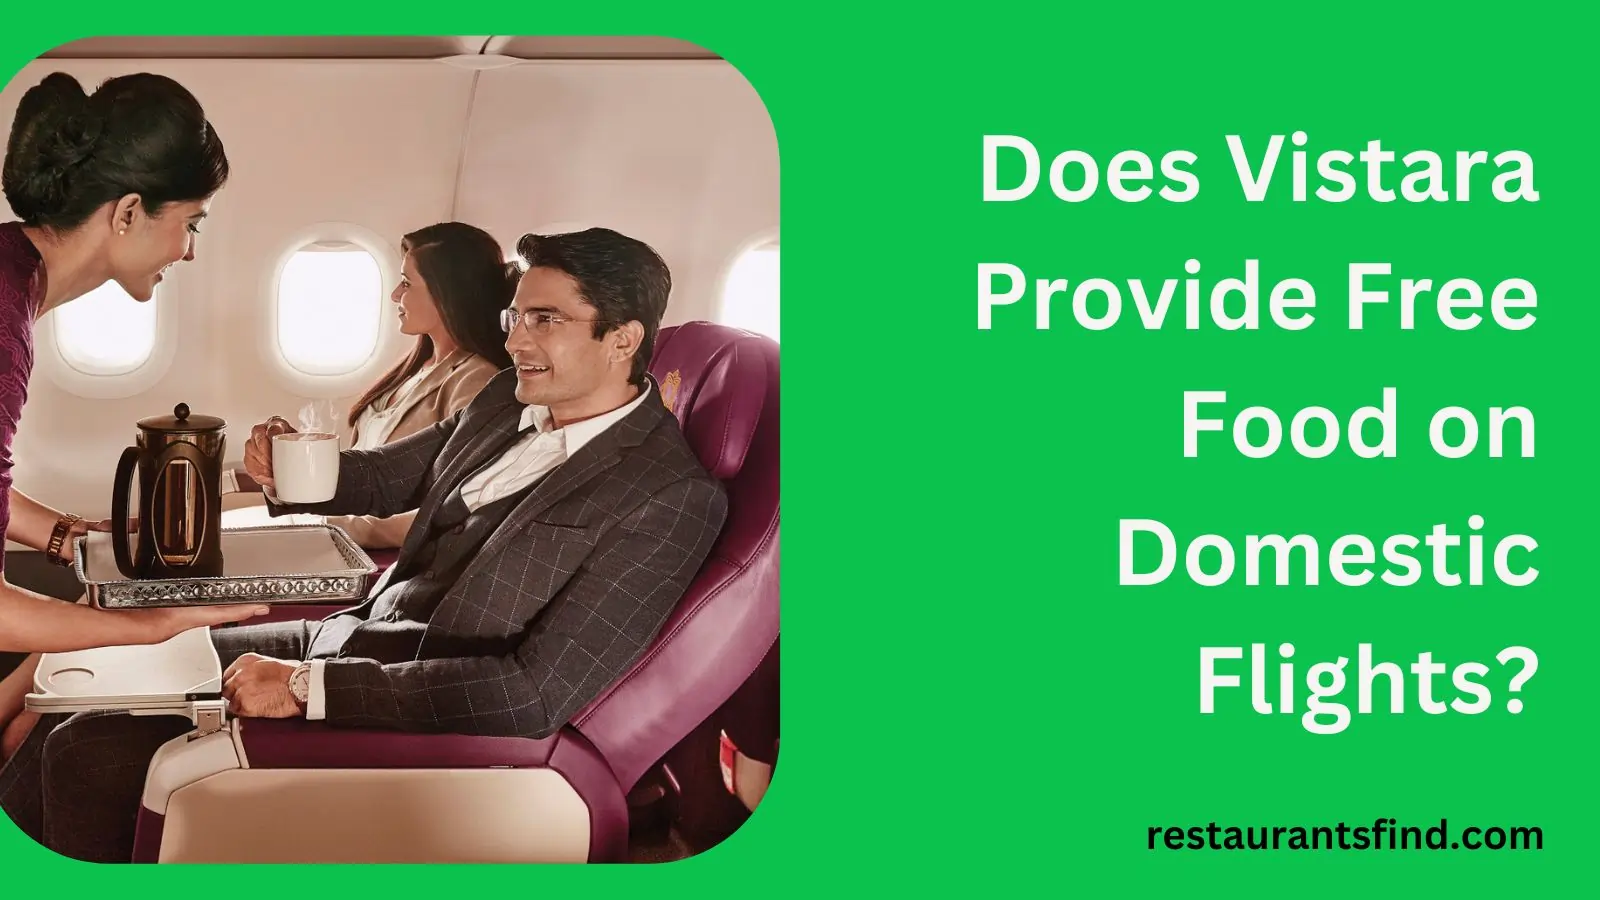 Does Vistara Provide Free Food on Domestic Flights